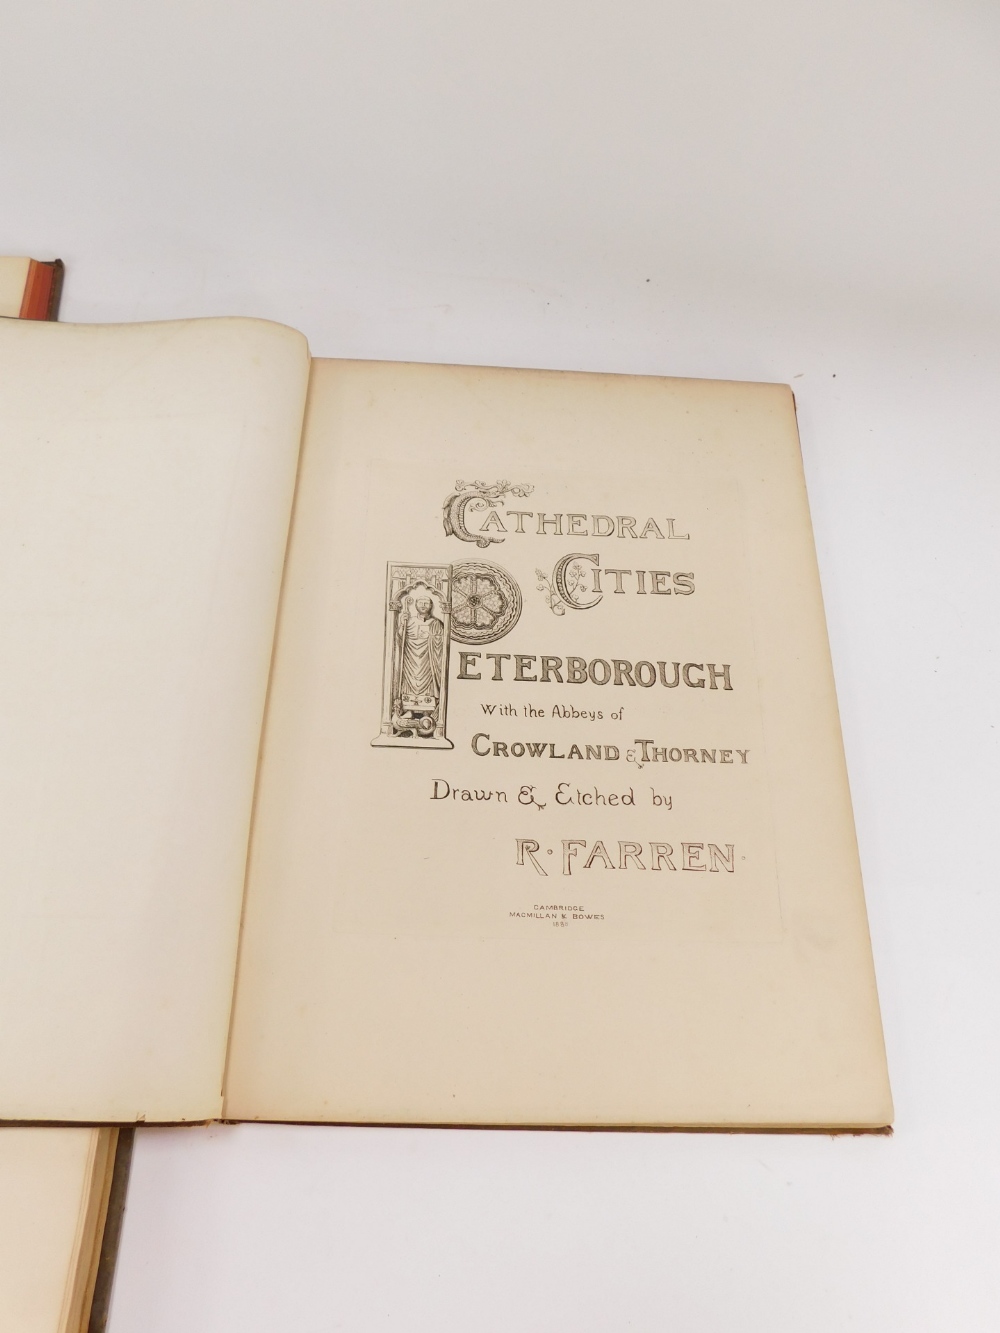 Three mid 19thC books, comprising Thomas Craddock, Peterborough Cathedral, dated 9M 1844, John Brita - Image 2 of 3